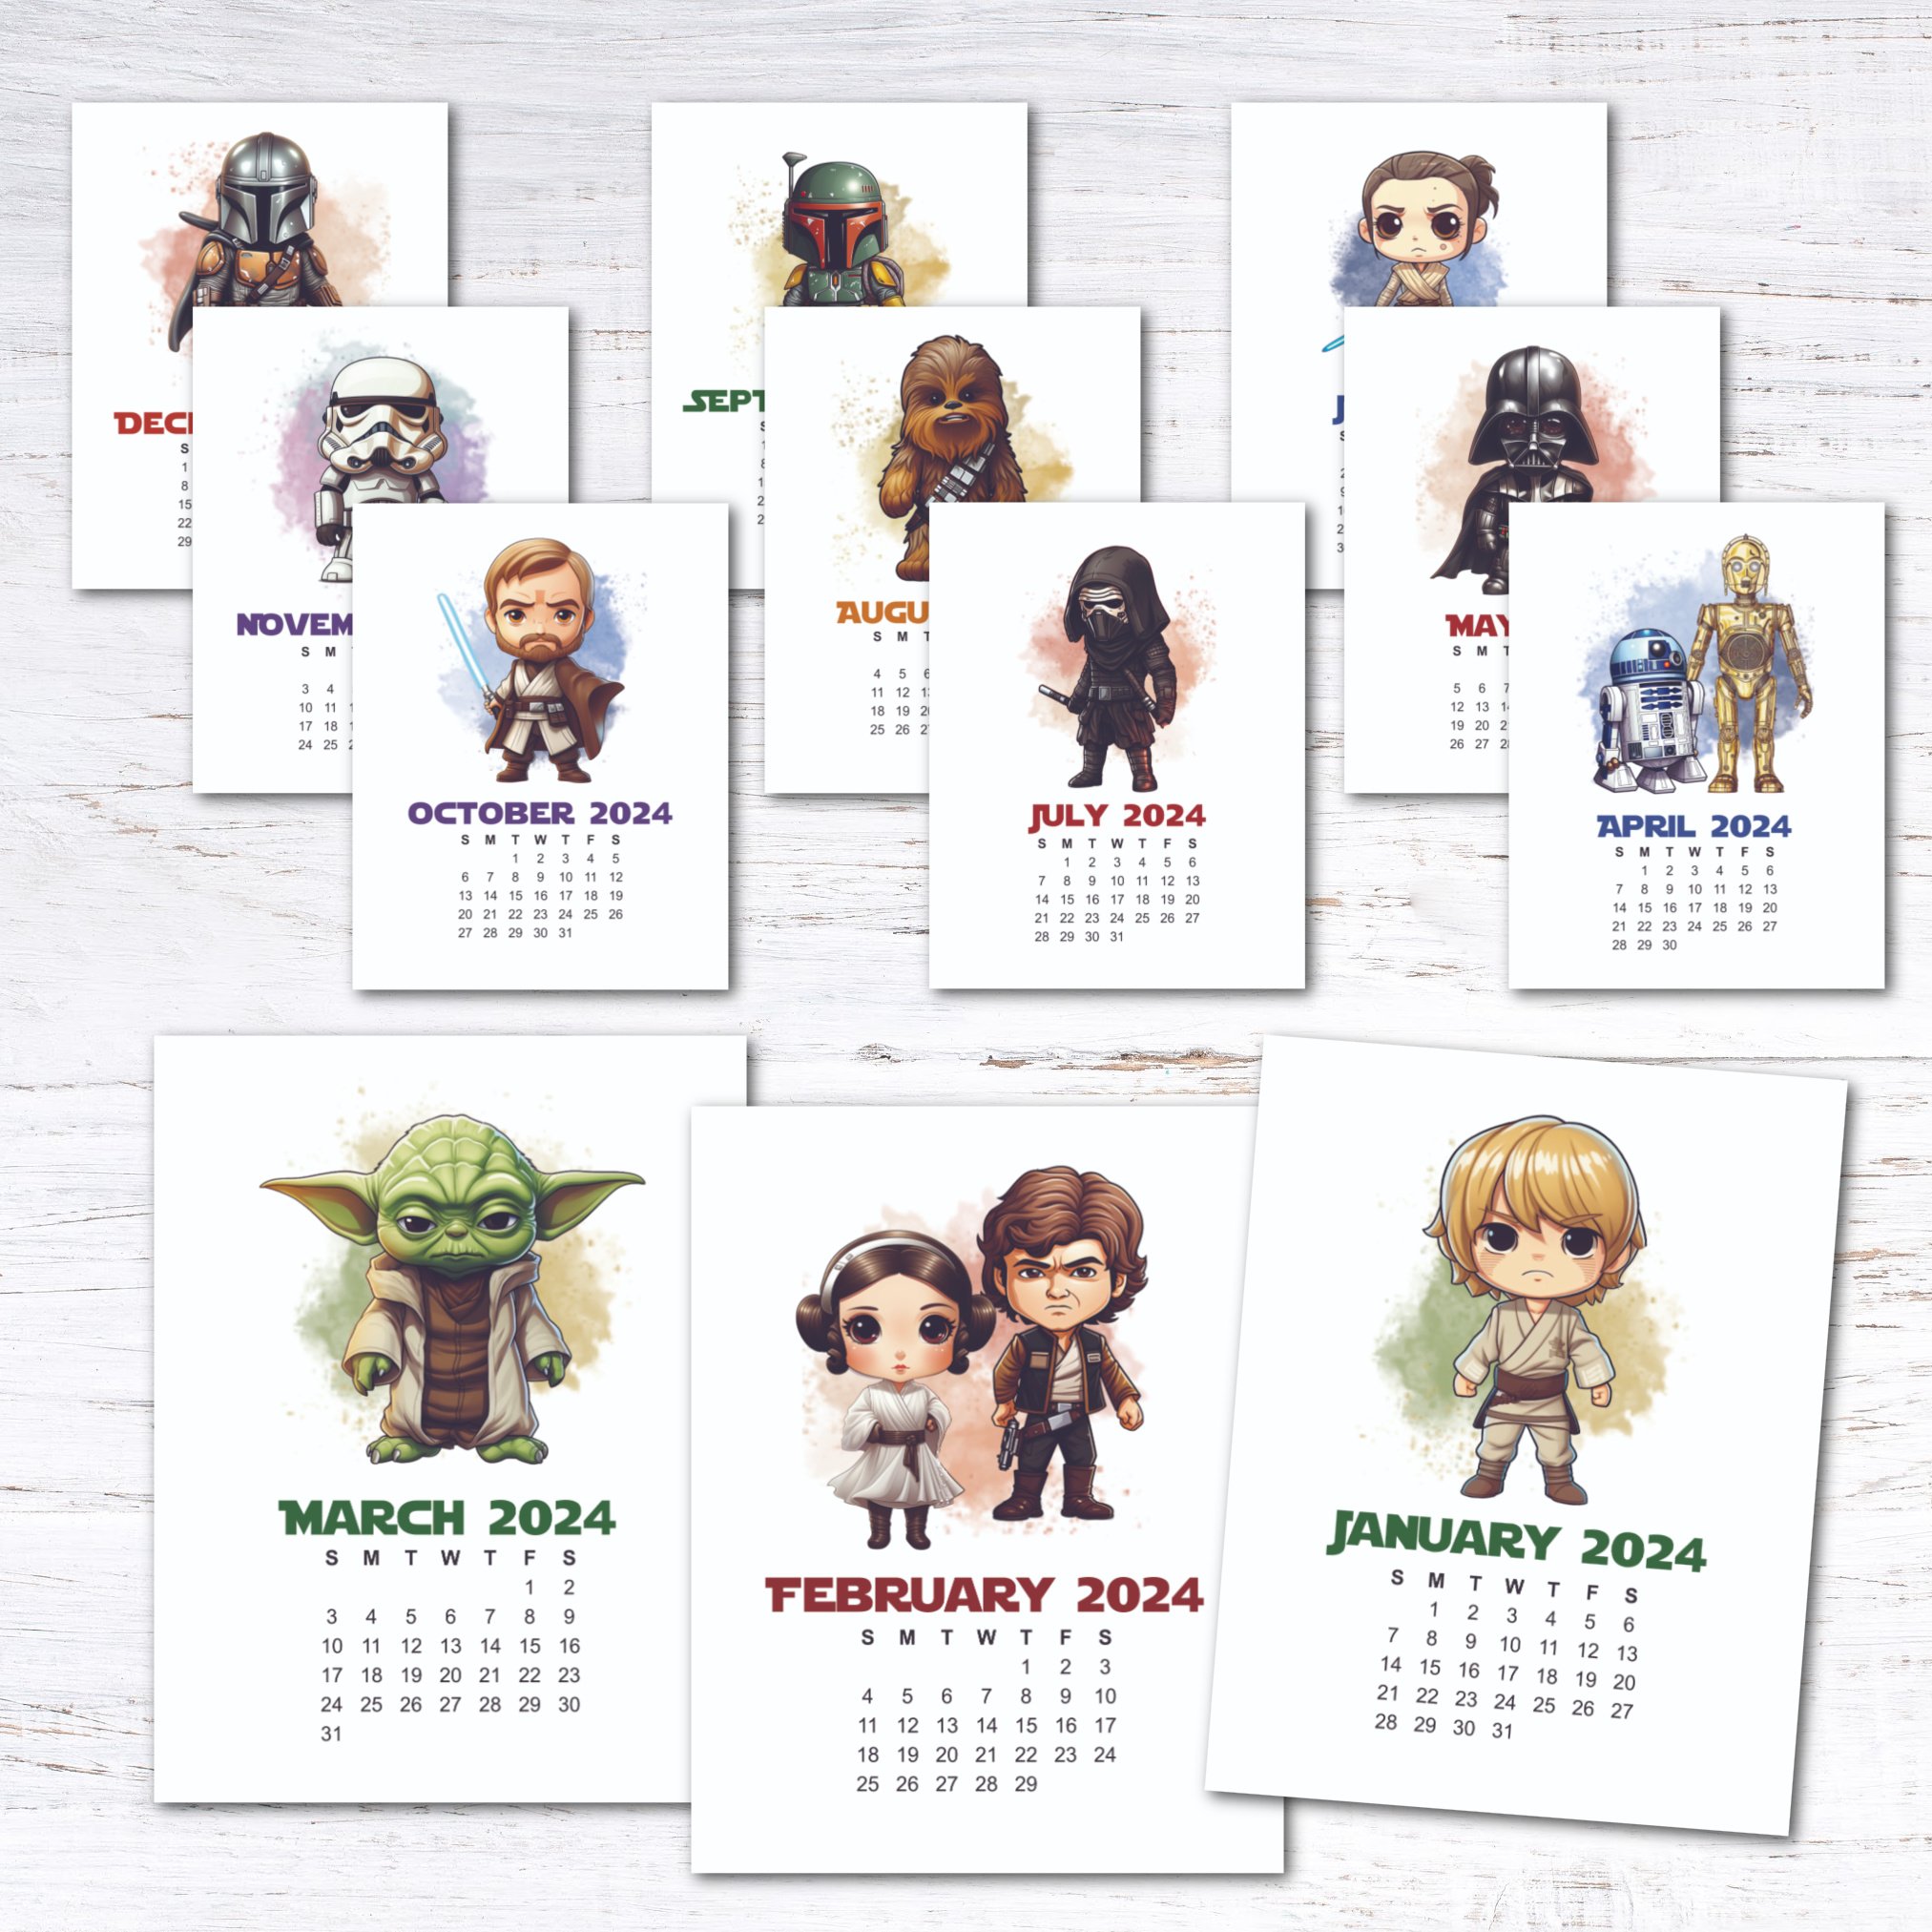 Free Printable 2024 Star Wars Calendar